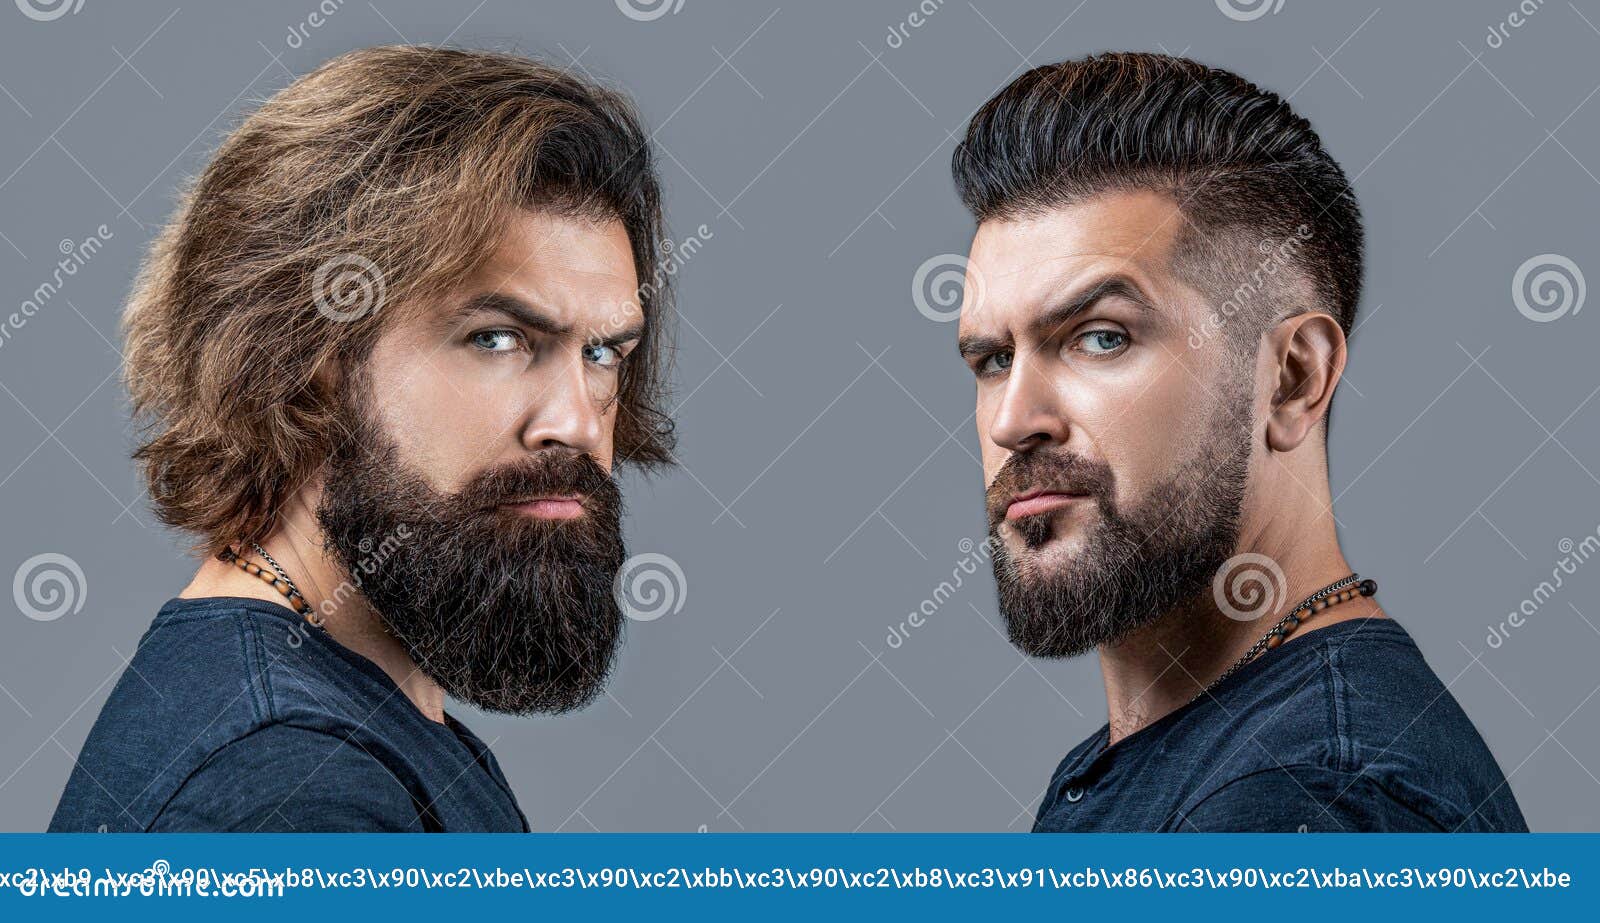 Men's Beard, Men's Beard and Shave